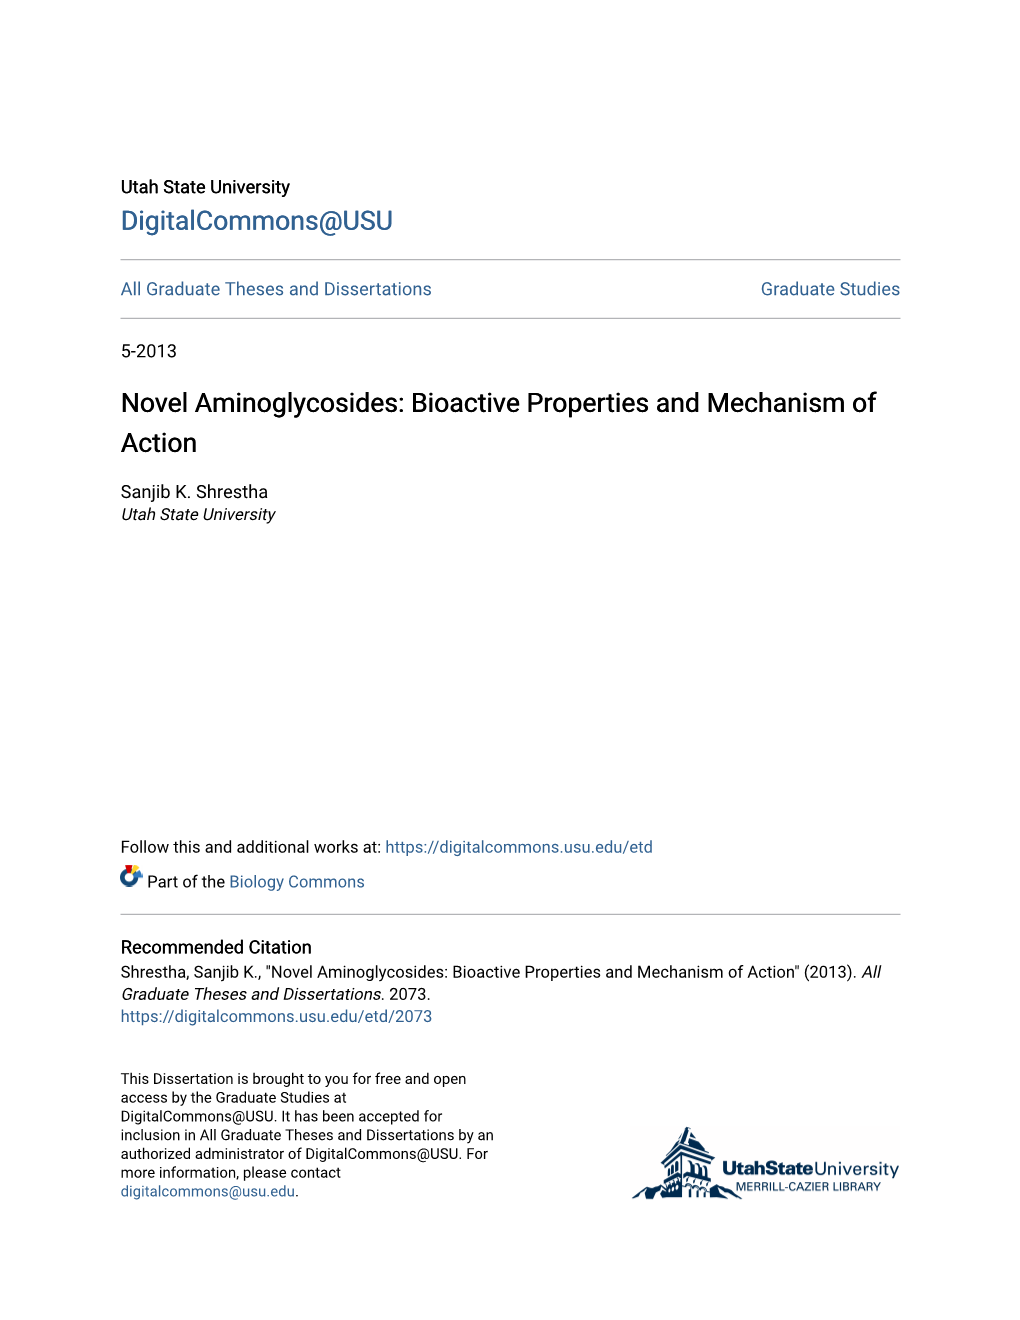 Novel Aminoglycosides: Bioactive Properties and Mechanism of Action